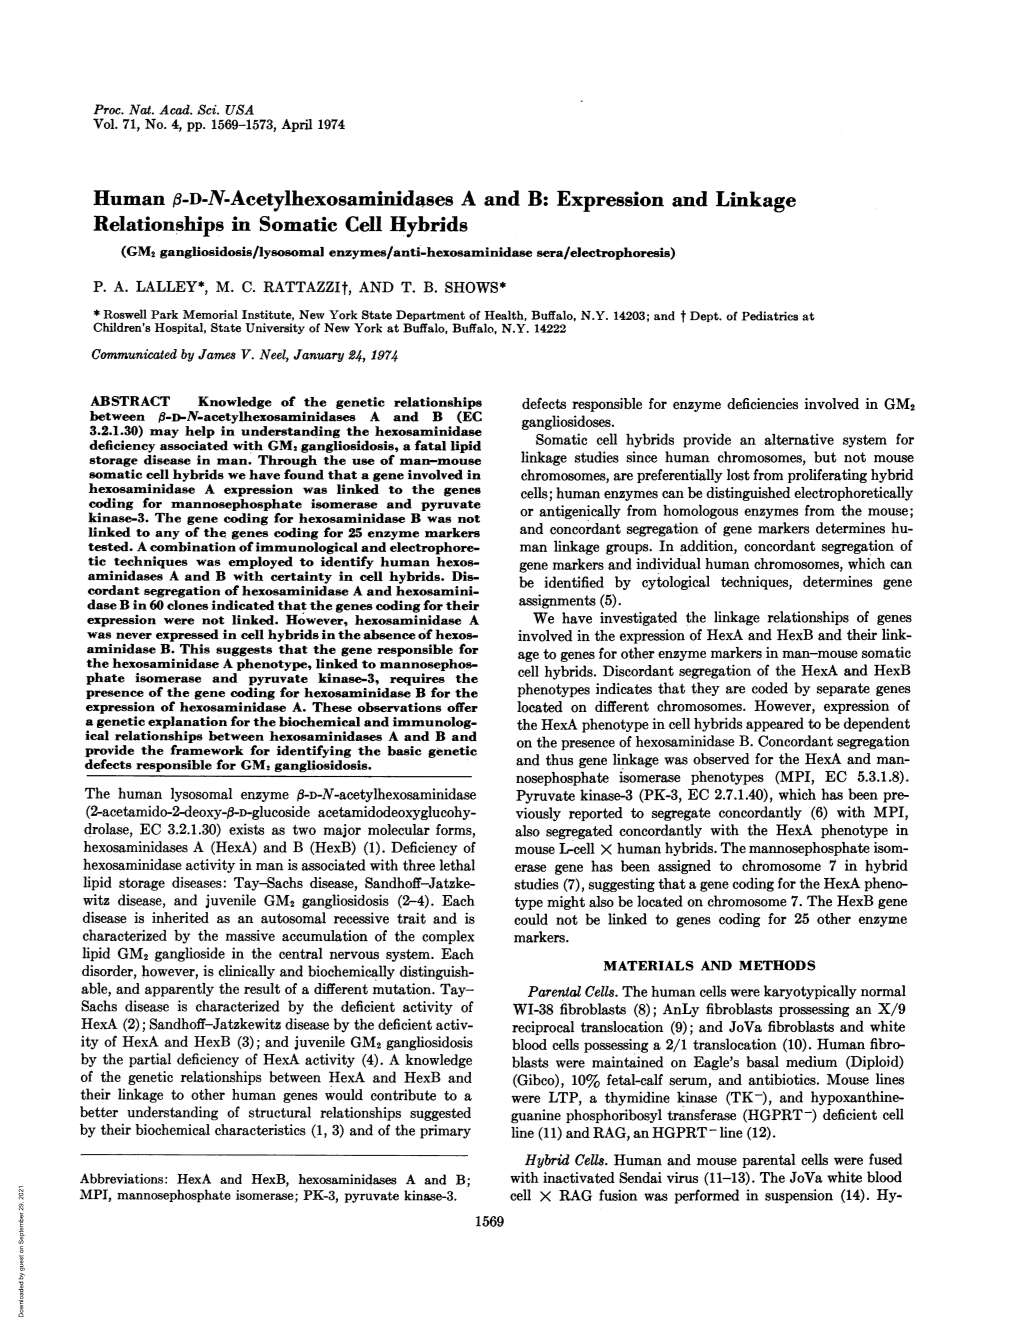 Expression and Linkage Relationships in Somatic Cell Hybrids (GM2 Gangliosidosis/Lysosomal Enzymes/Anti-Hexosaminidase Sera/Electrophoresis)